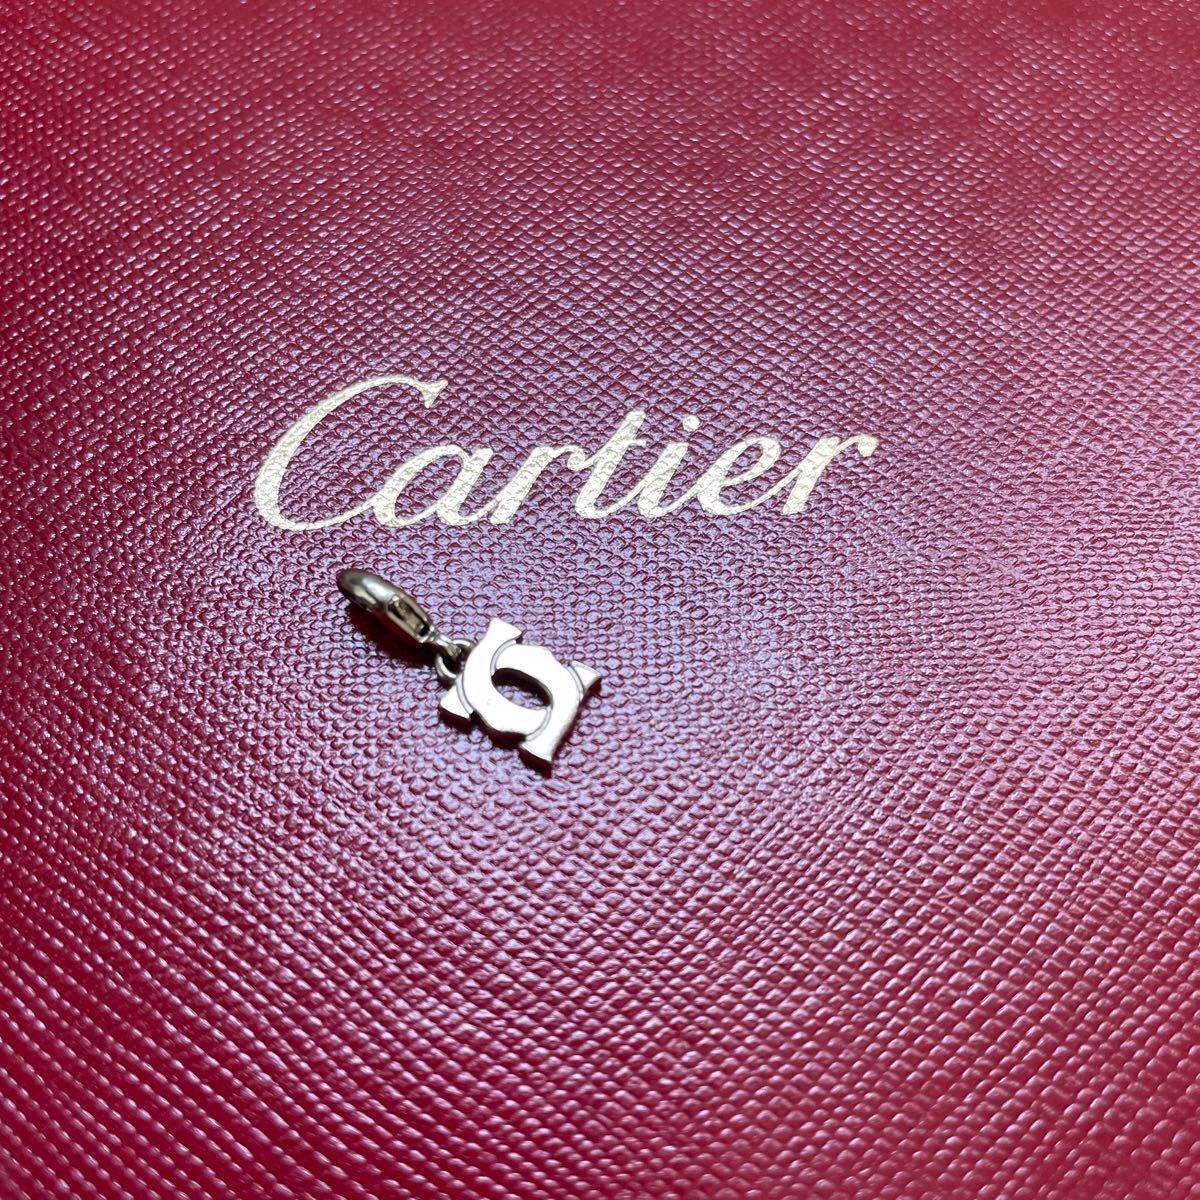 Cartierカルティエ　2Cベビーチャーム 750WG K18